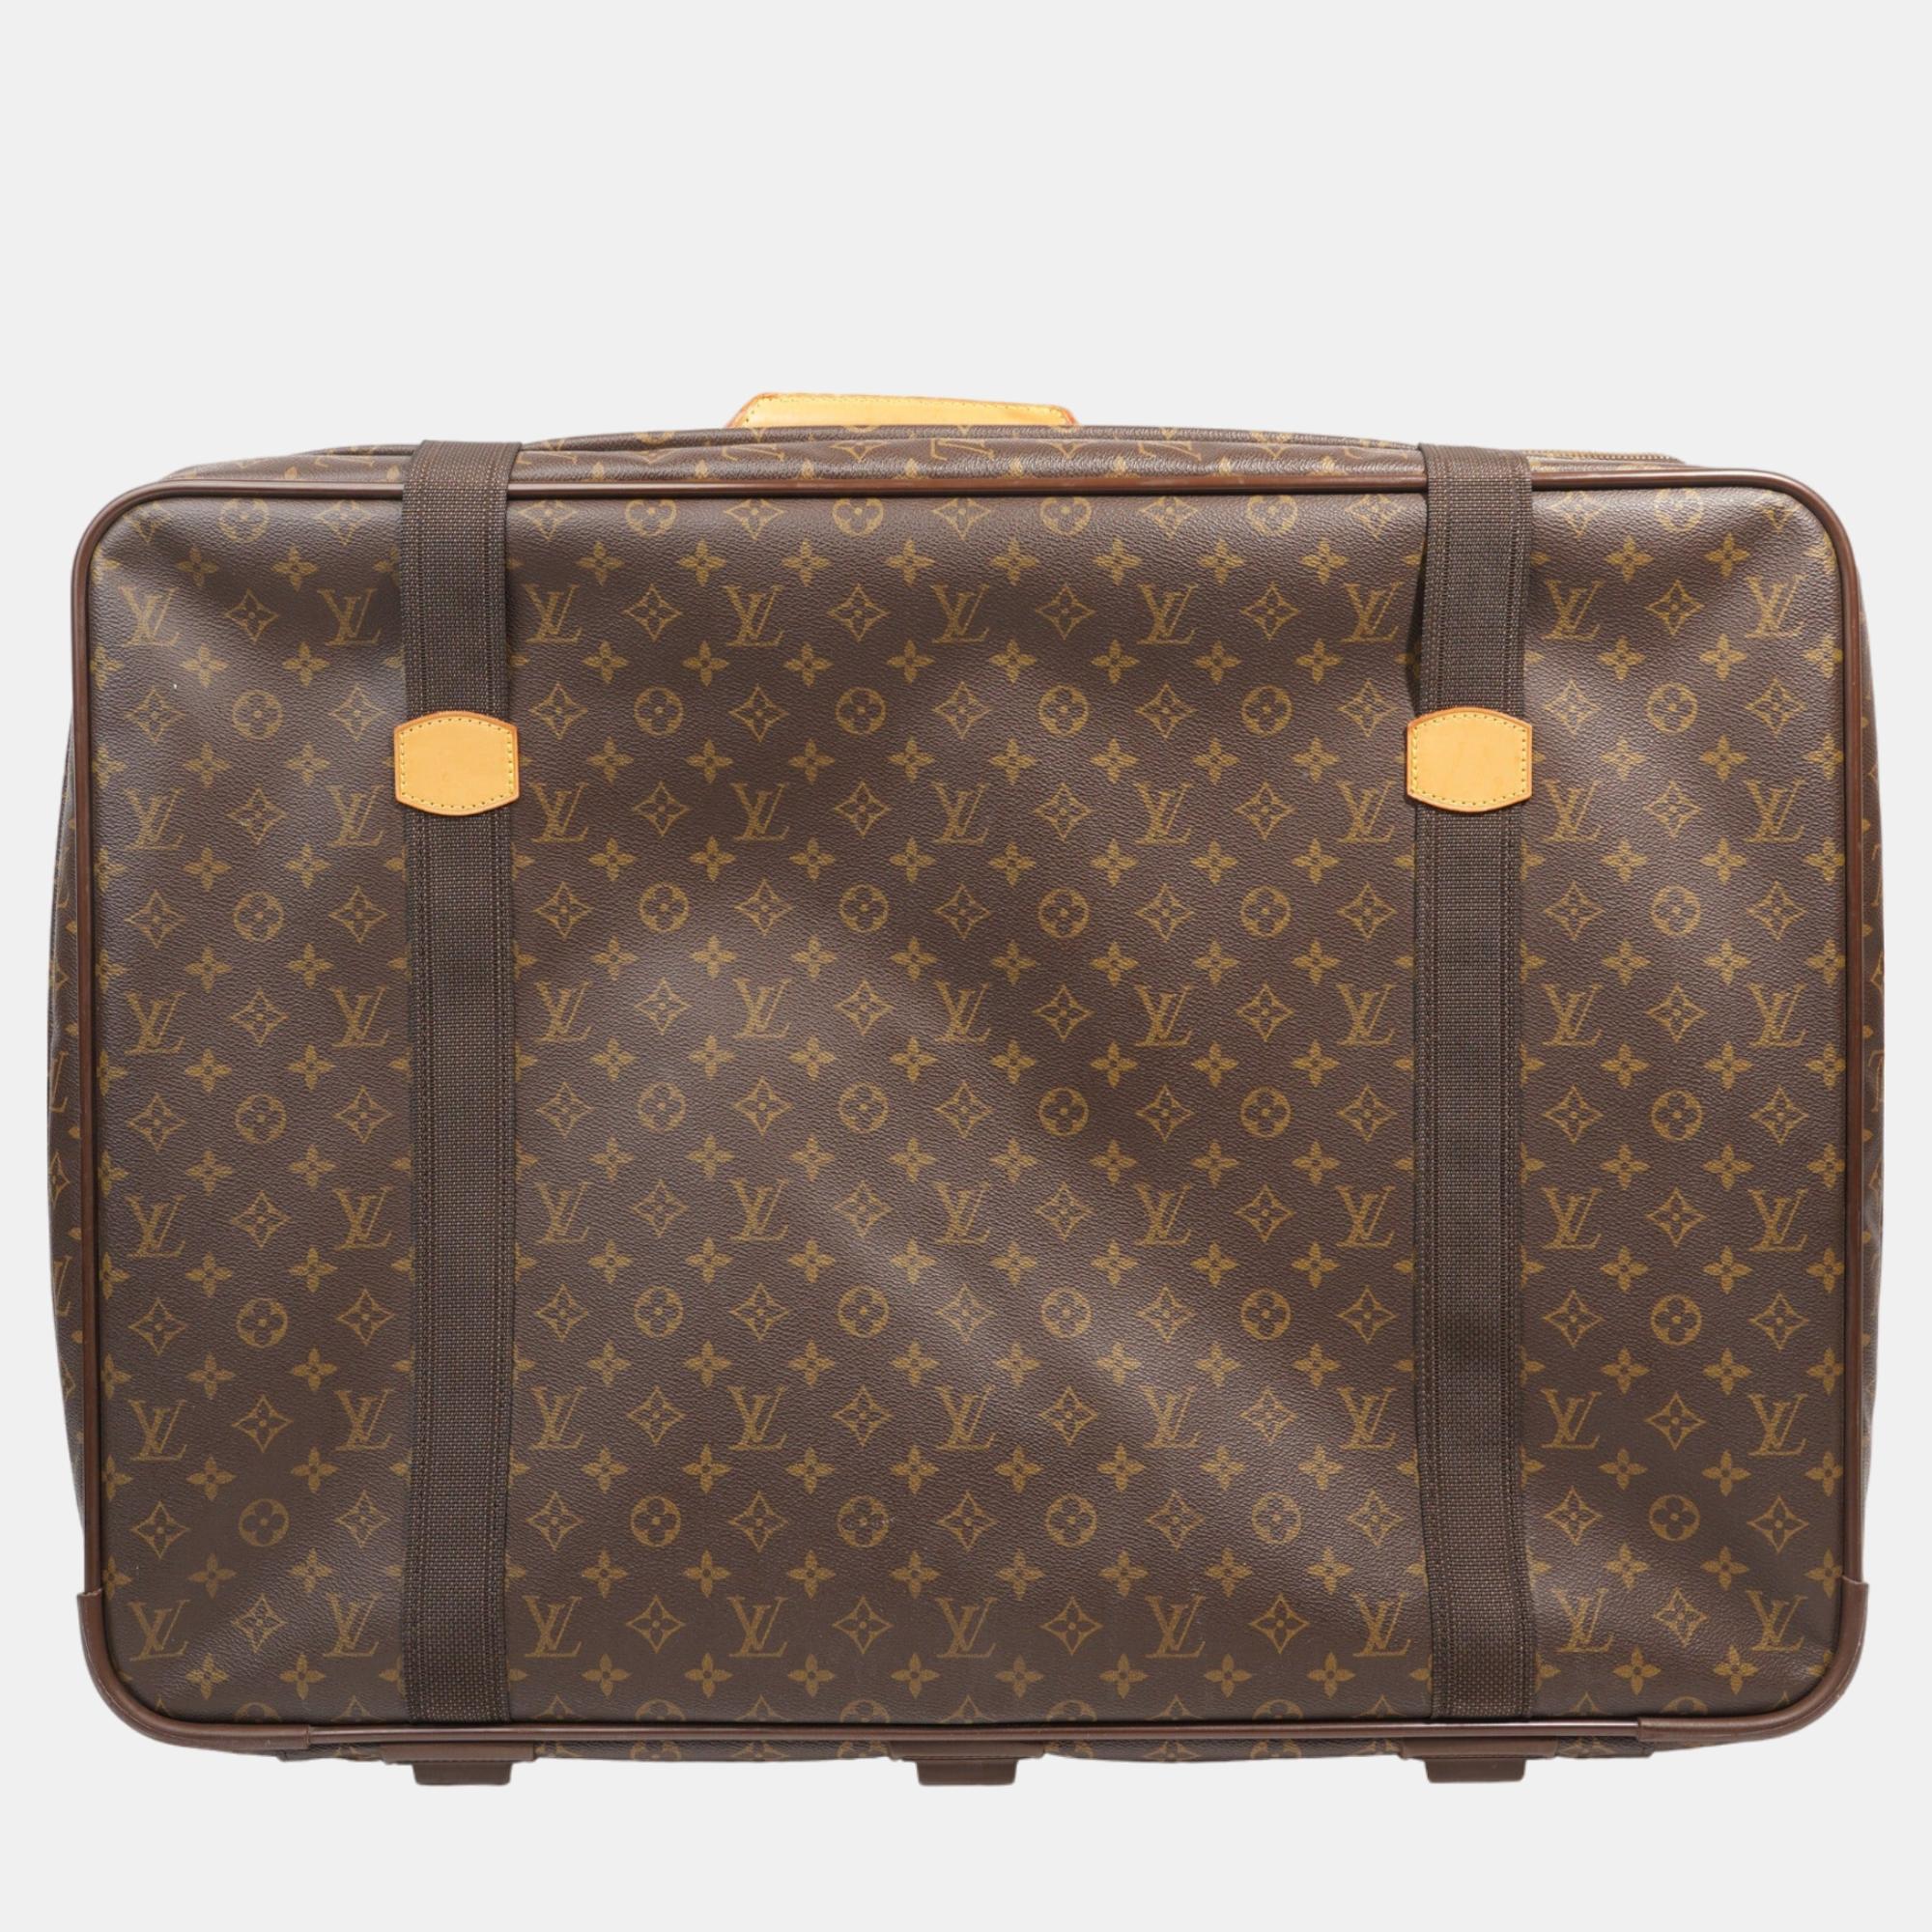 Louis Vuitton Satellite 60 Monogram Travel Bag